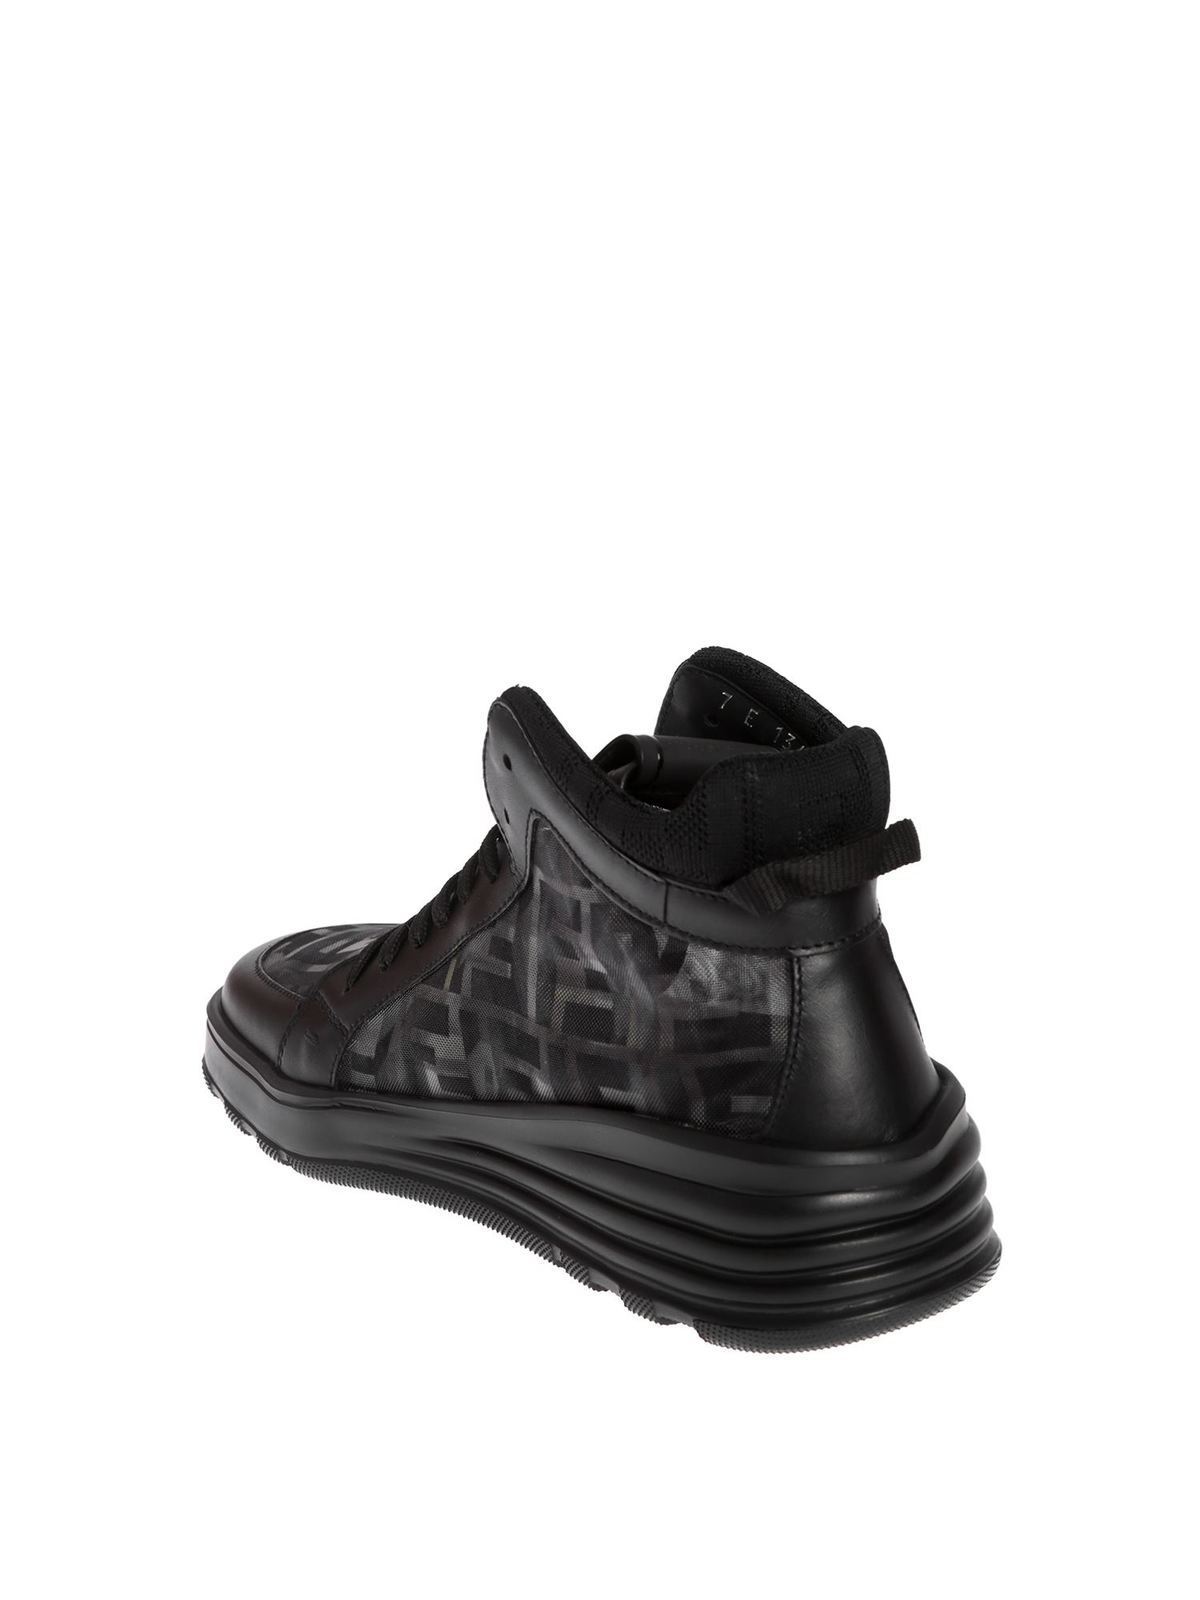 Fendi - High top sneakers in black with 